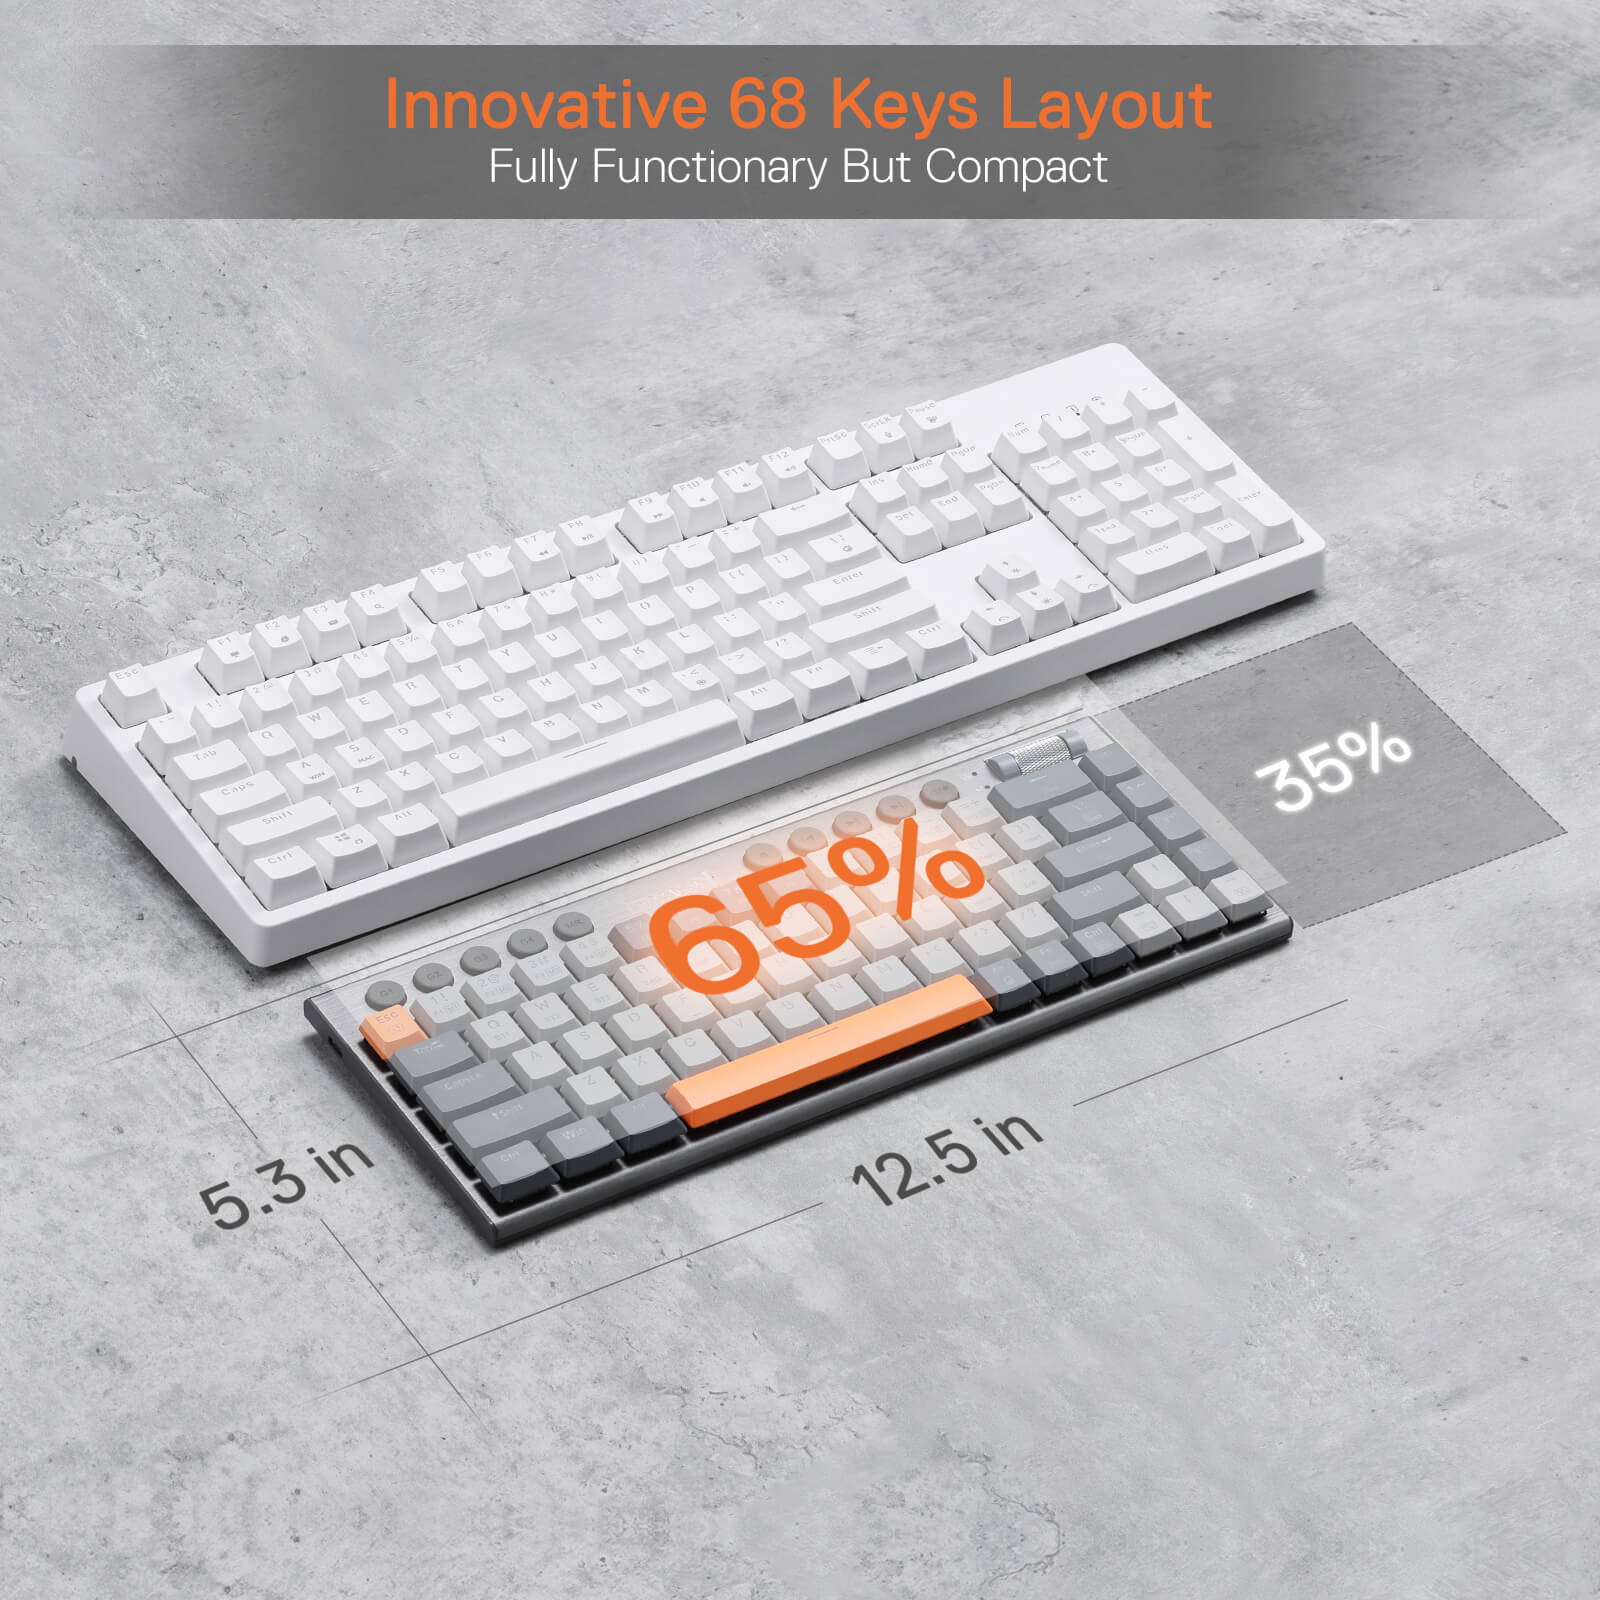 Redragon K609 65% Wireless RGB Mechanical Keyboard, BT/2.4Ghz/Wired Tri-Mode Ultra-Thin Low Profile Gaming Keyboard, On-Board Macros, Dedicated Media Control & Linear Red Switch